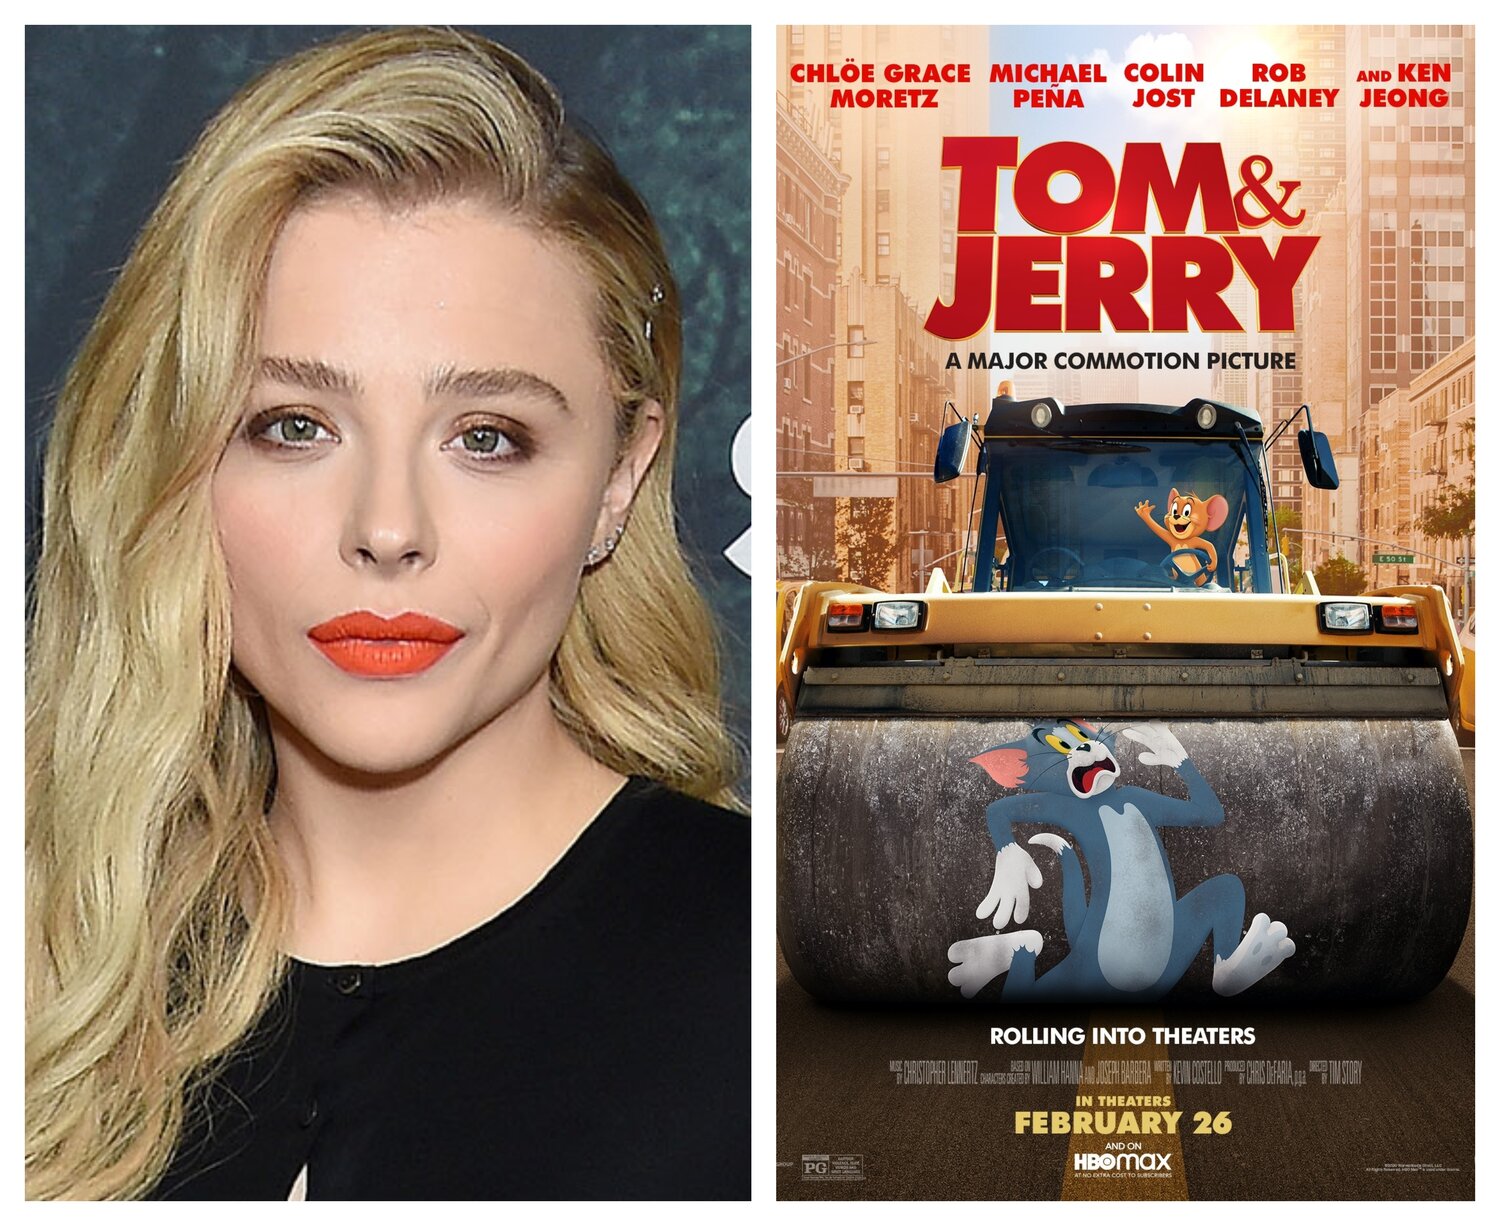 TOM AND JERRY Trailer 2 (NEW 2021) Chloë Grace Moretz Movie 